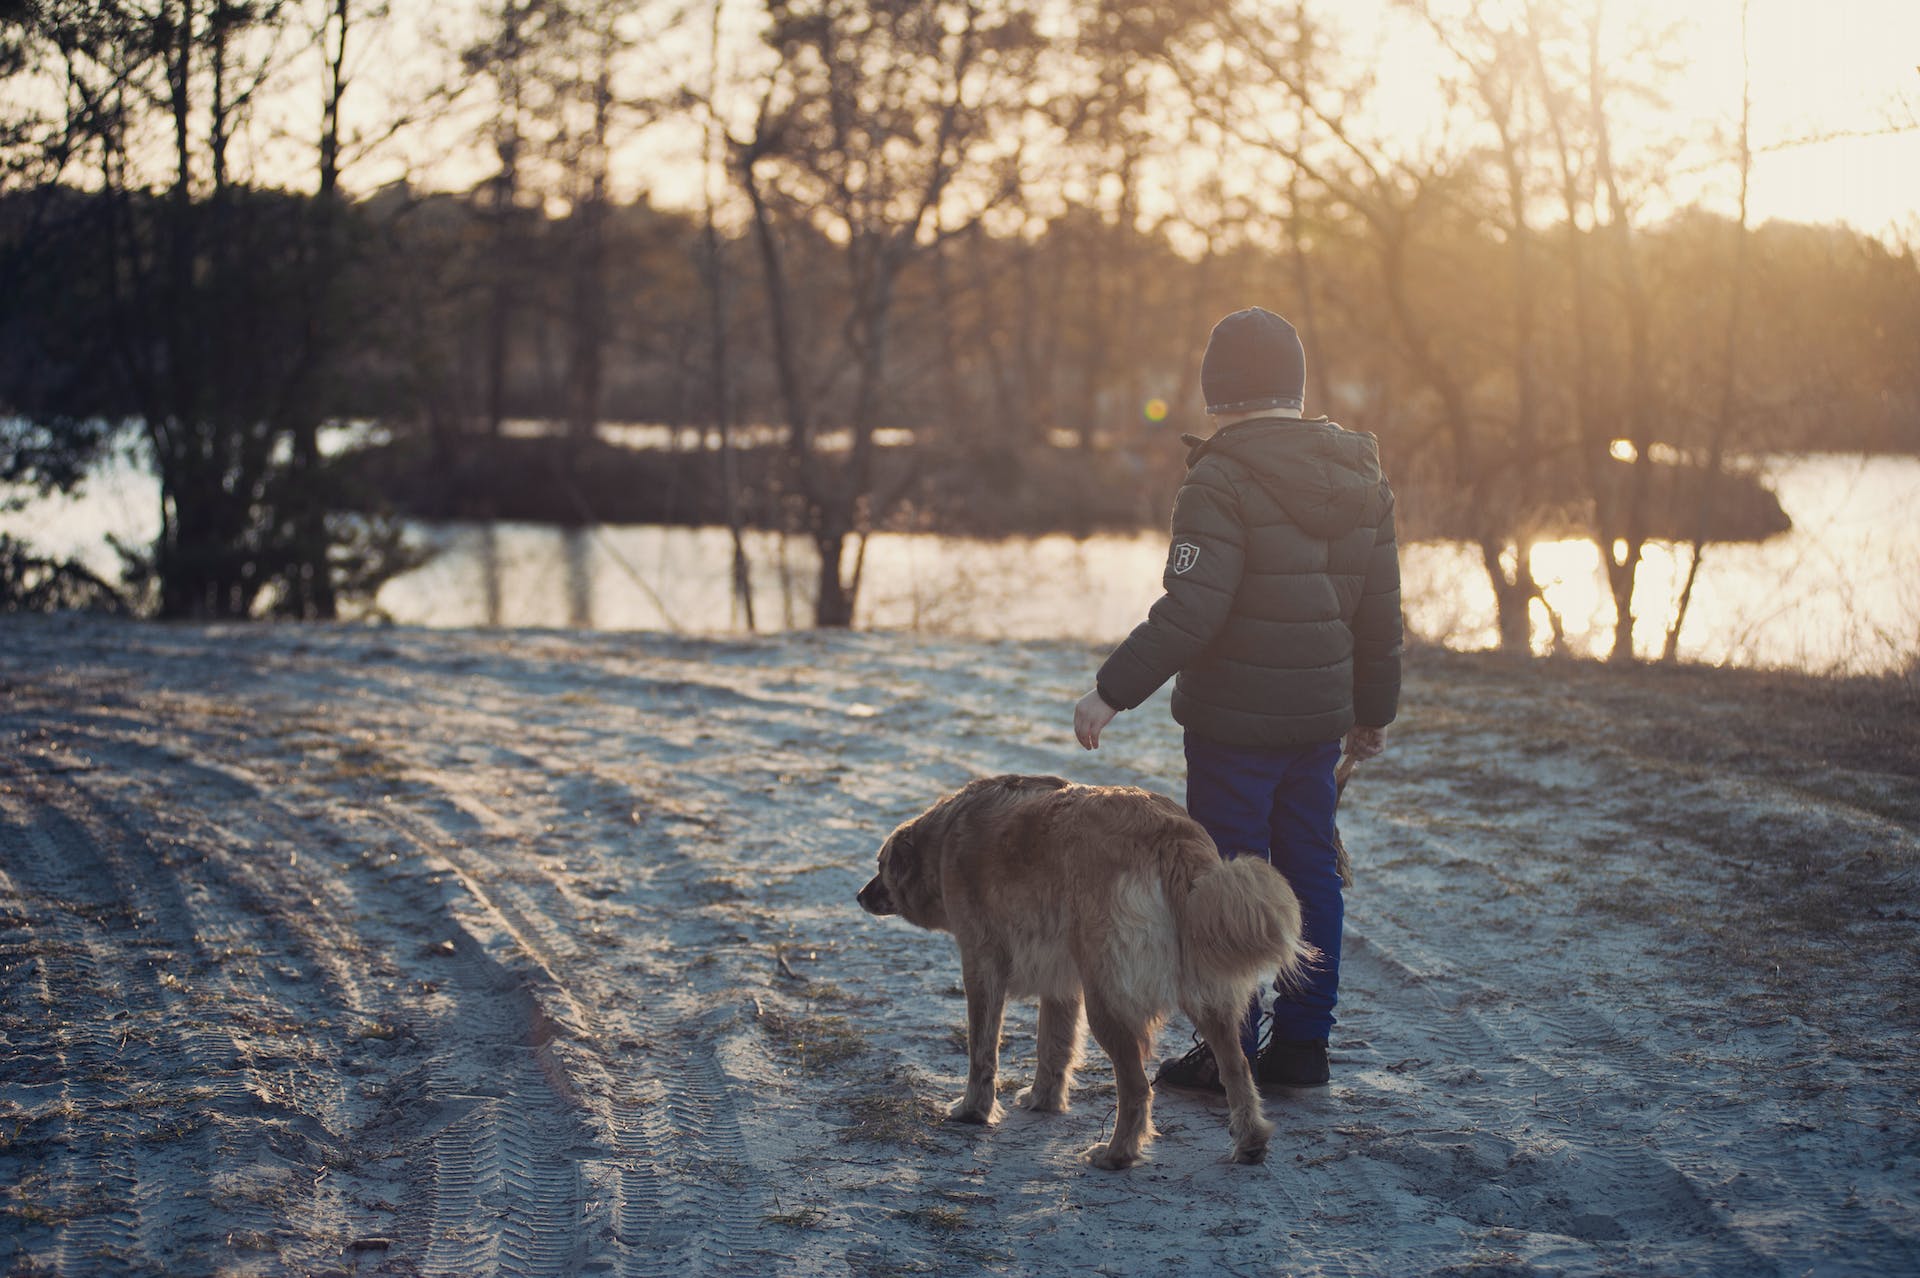 A boy walking his dog on a snowy path by a lake